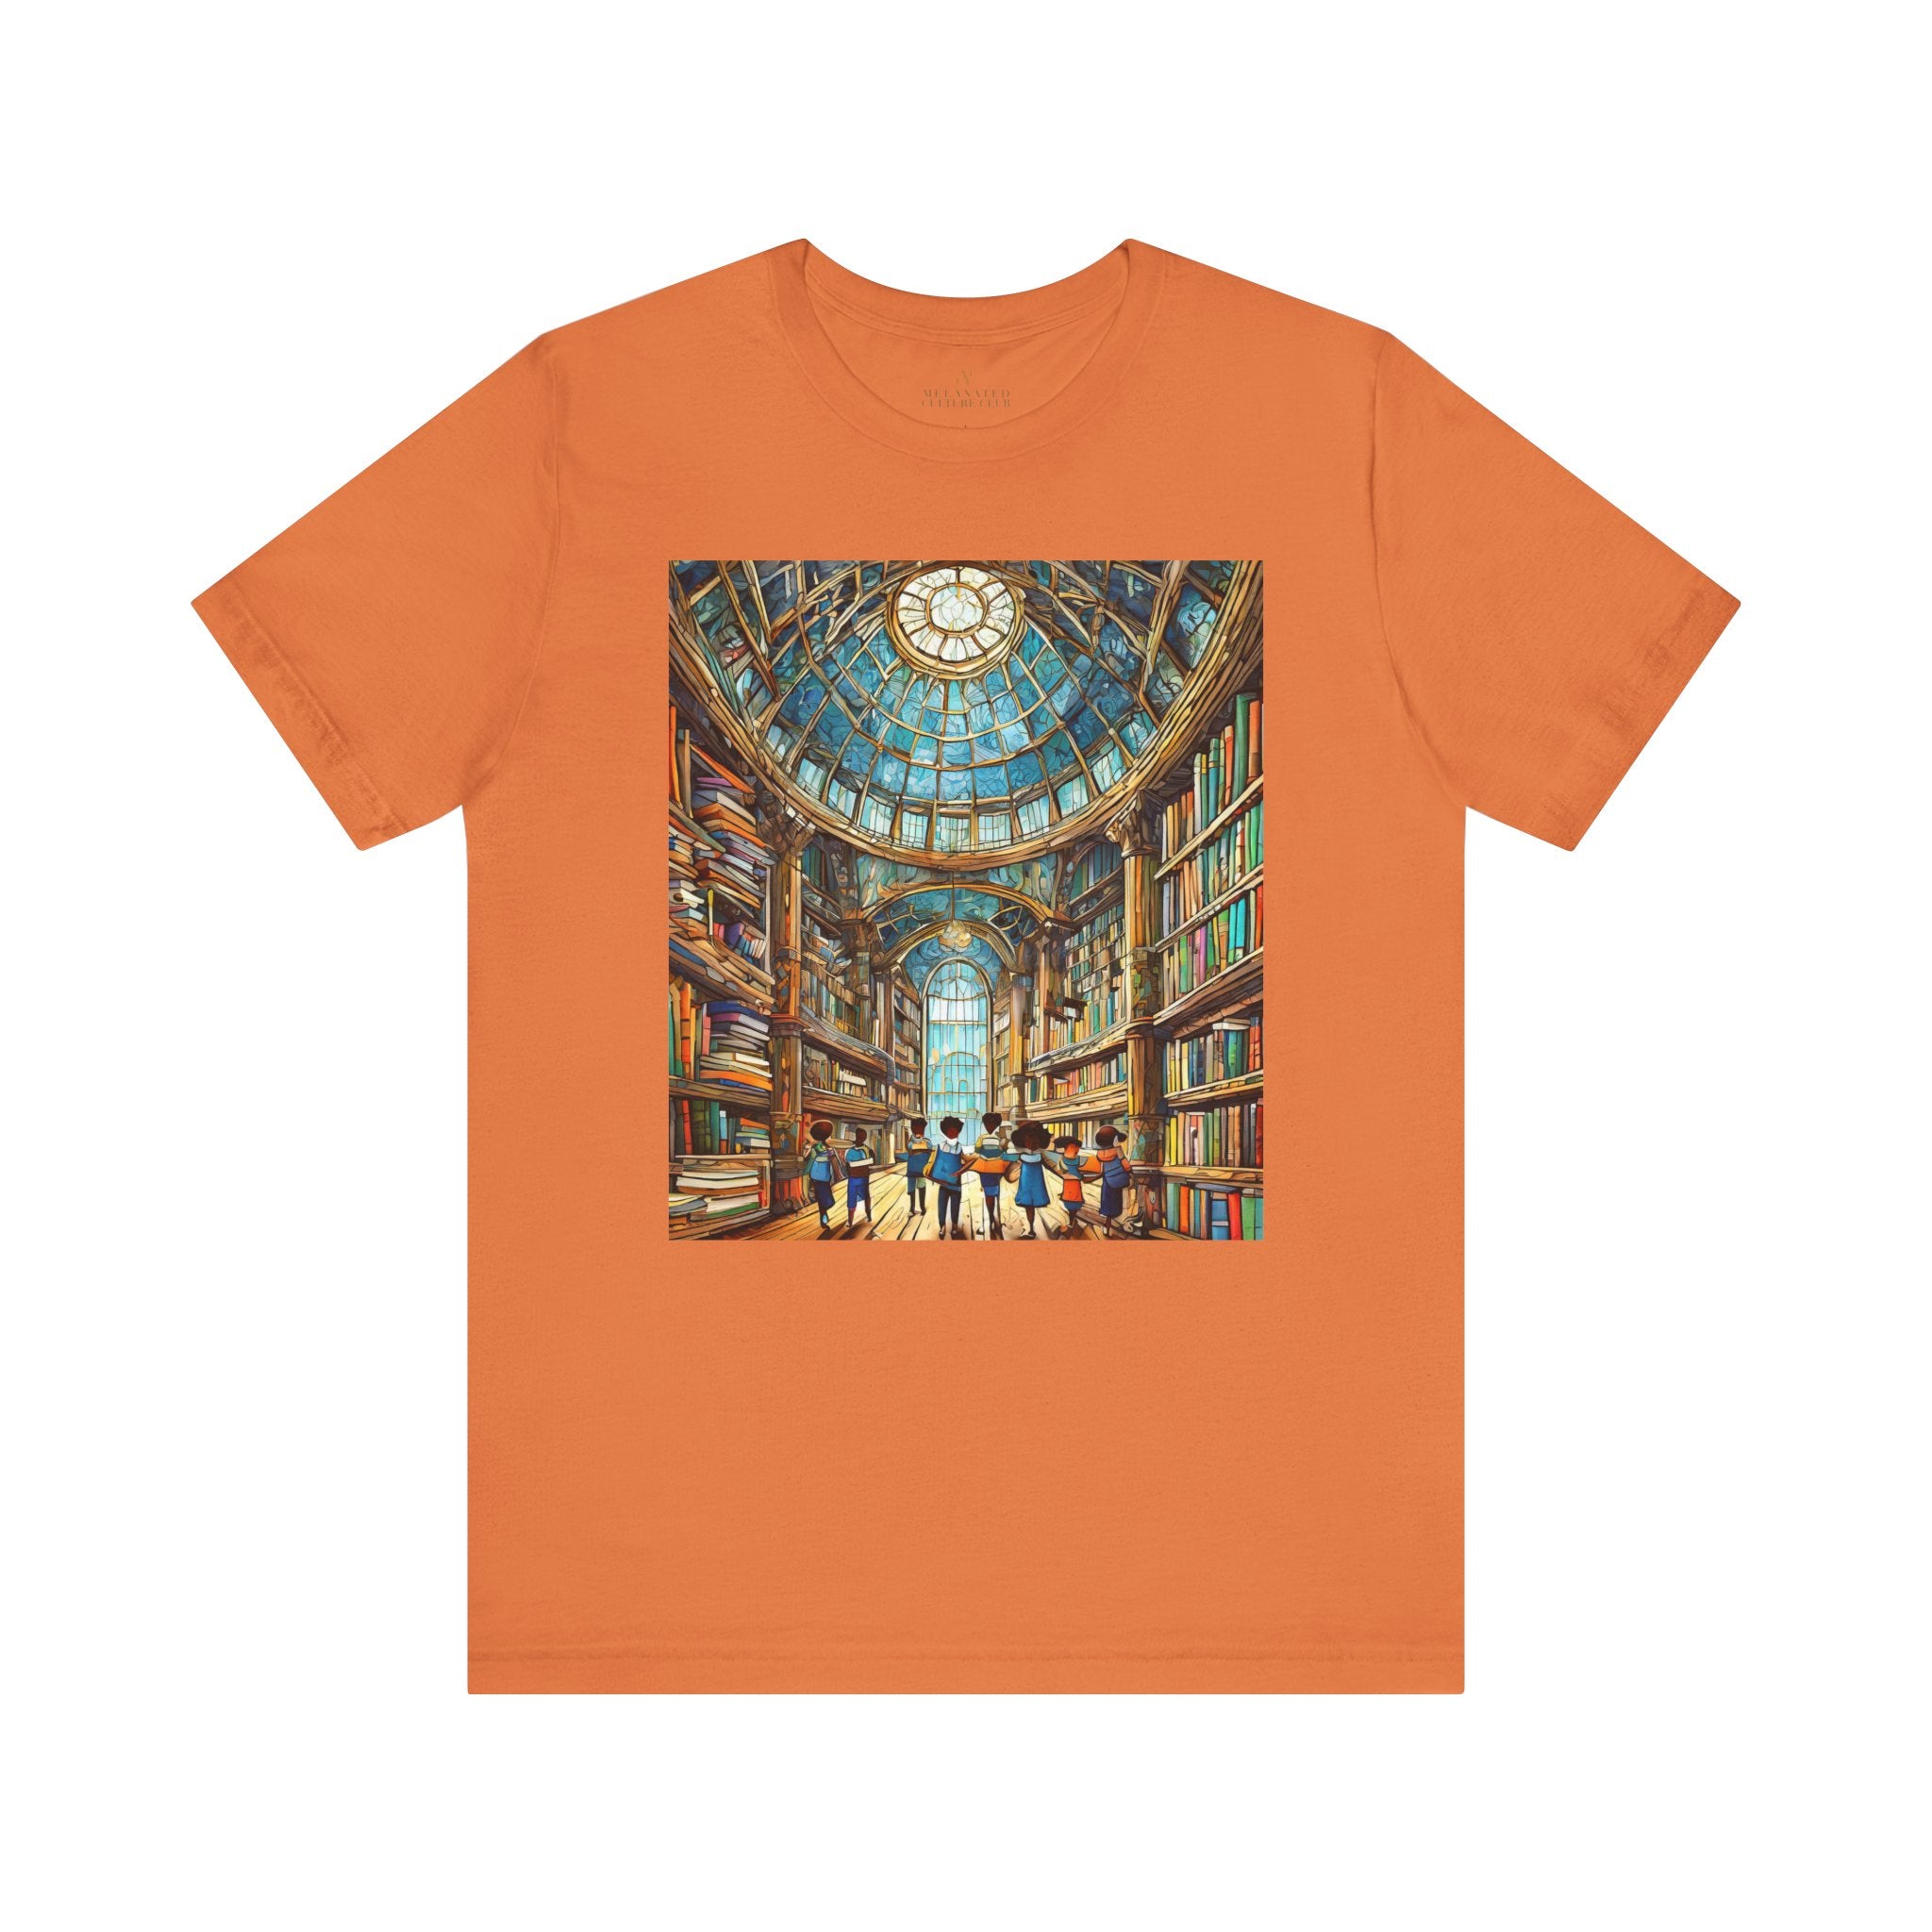 African American Kids at Library Tee shirt in orange.